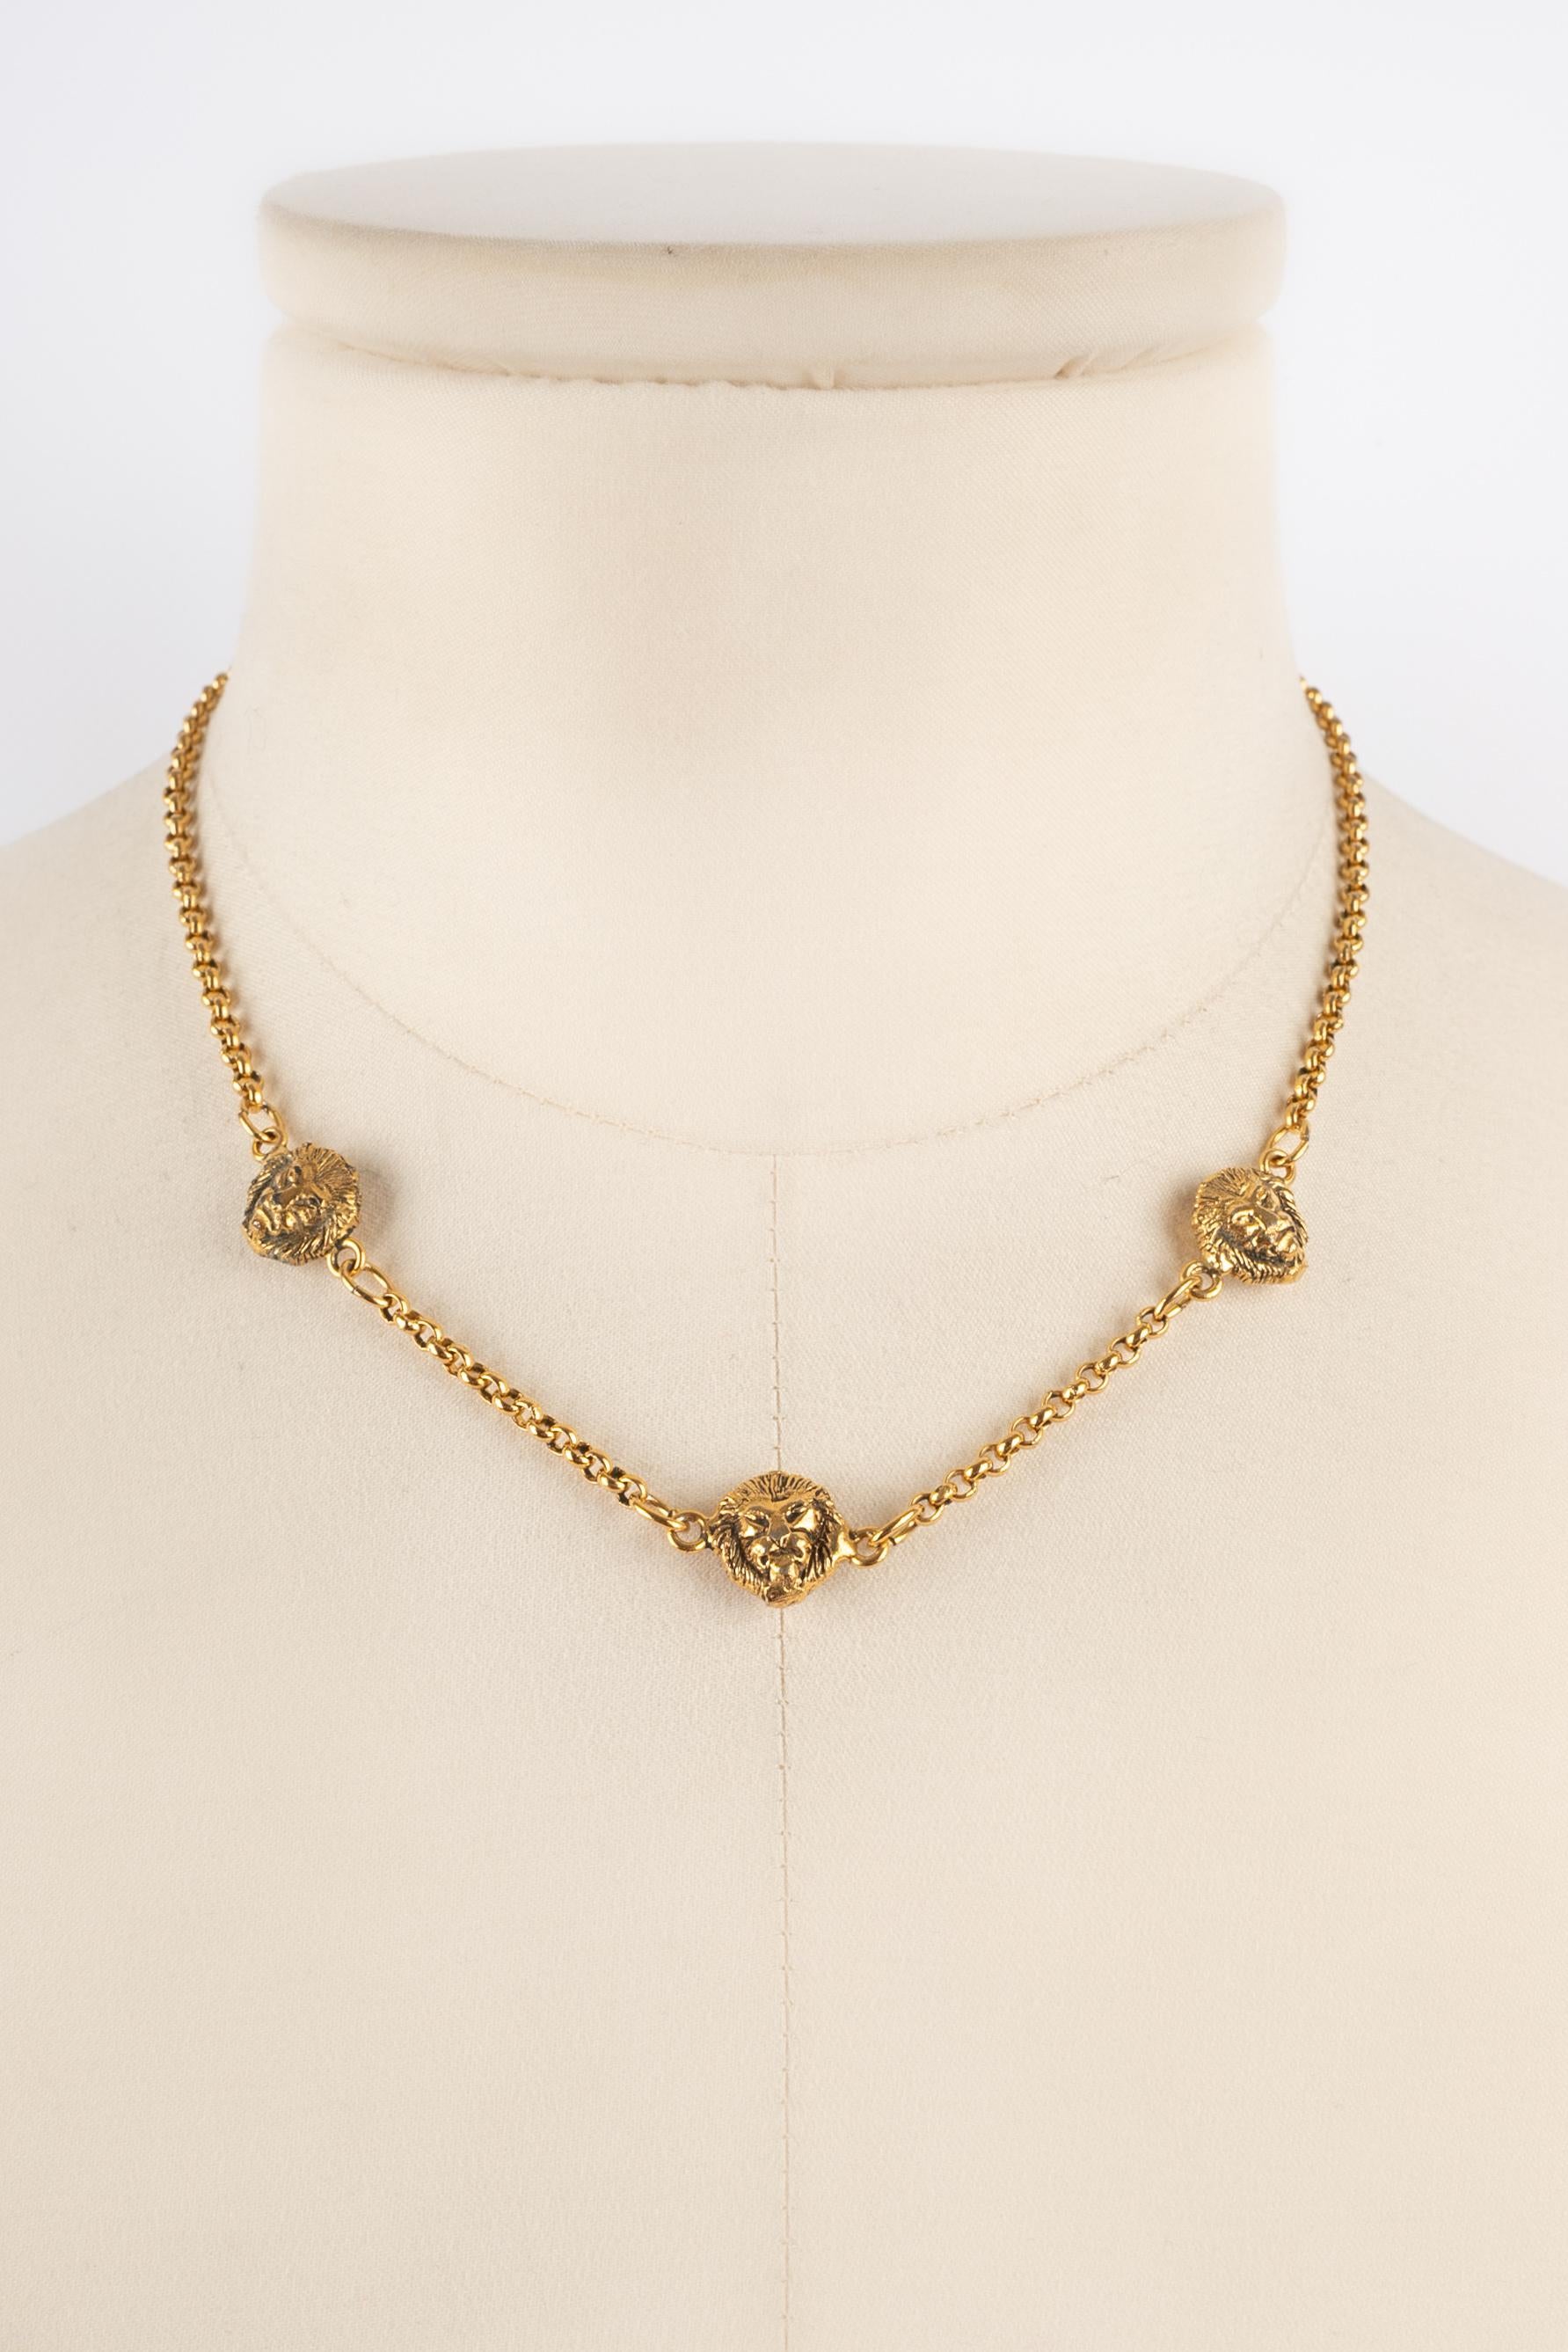 Chanel lion necklace For Sale 3